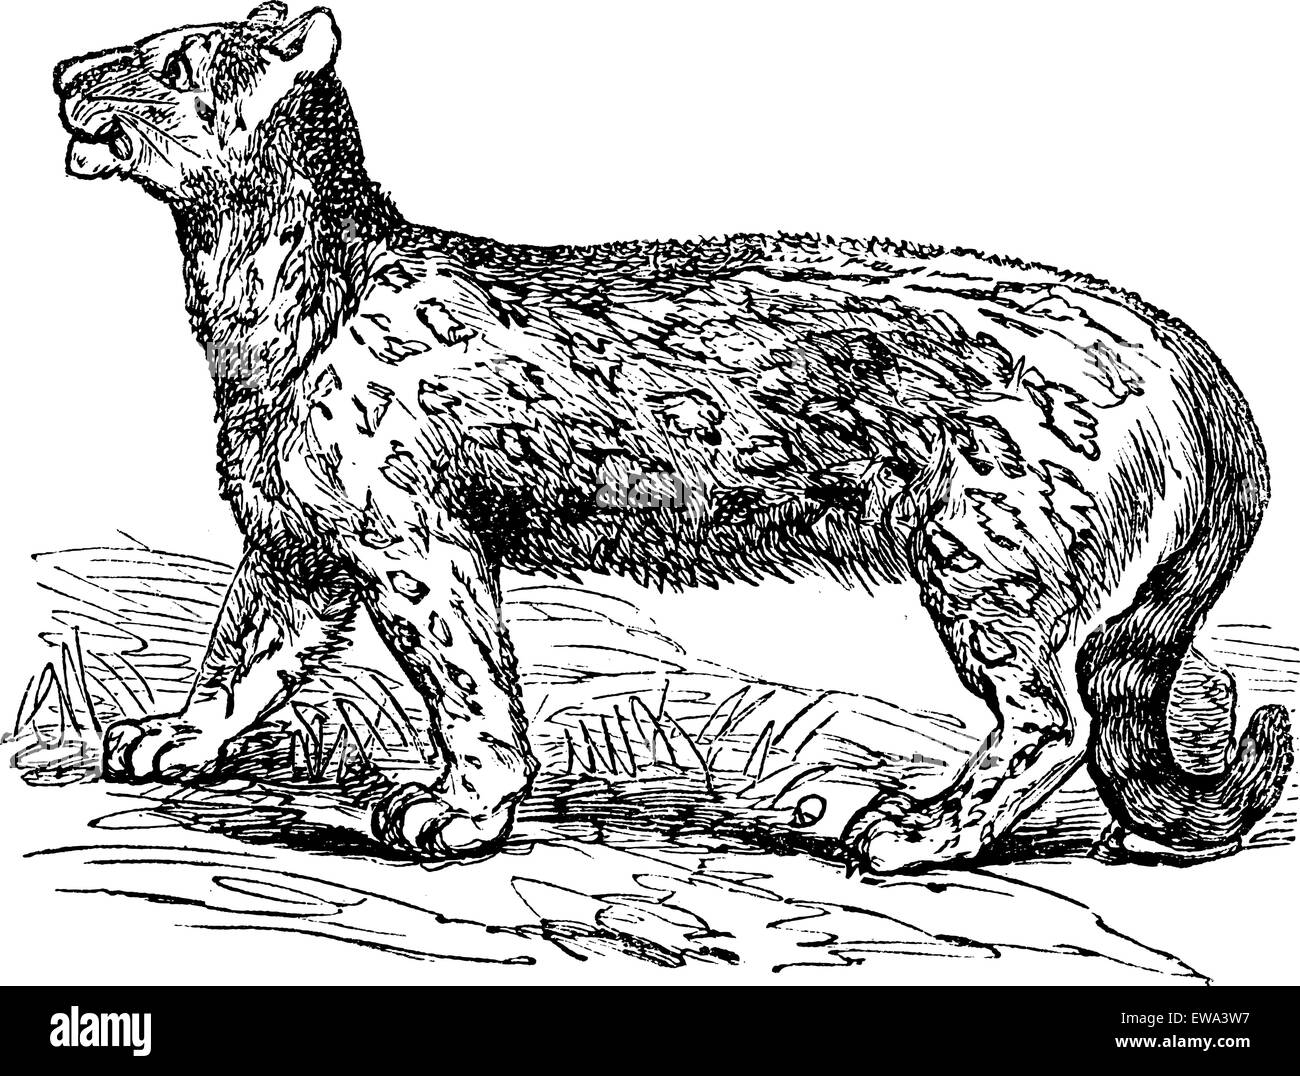 Snow Leopard, Uncia Uncia, pardalis Uncia oder Panthera Uncia, graviert Vintage Illustration. Trousset Enzyklopädie (1886-1891). Stock Vektor